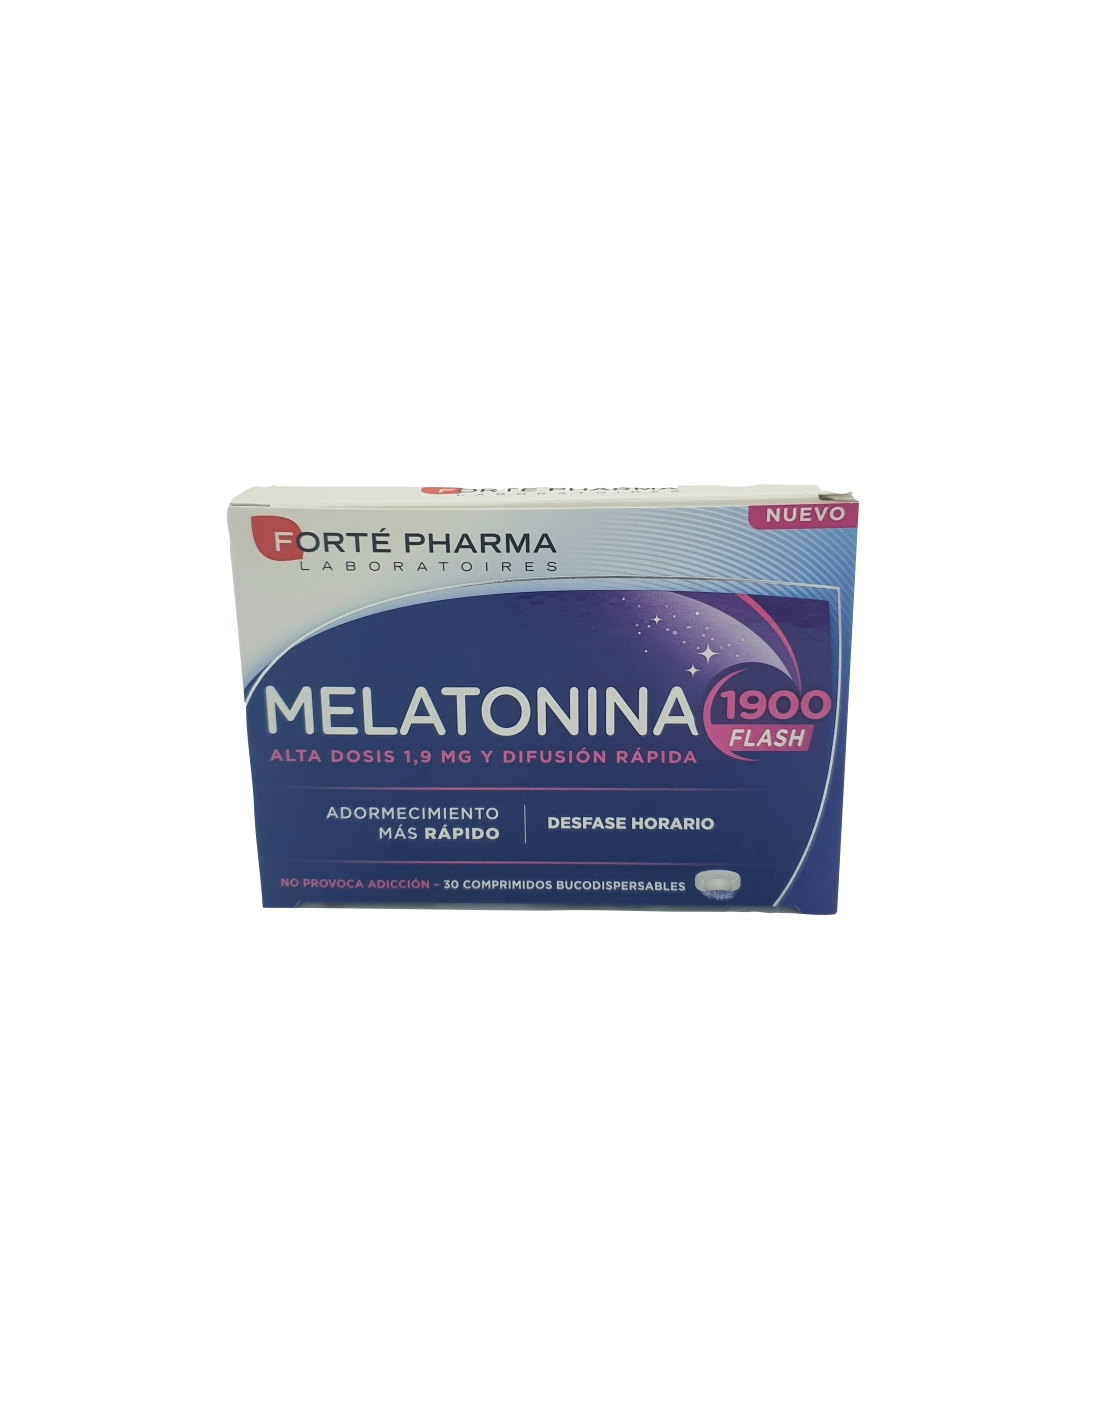 FORTE PHARMA Melatonina Flash 1900 30 Comprimidos Bucodispersables